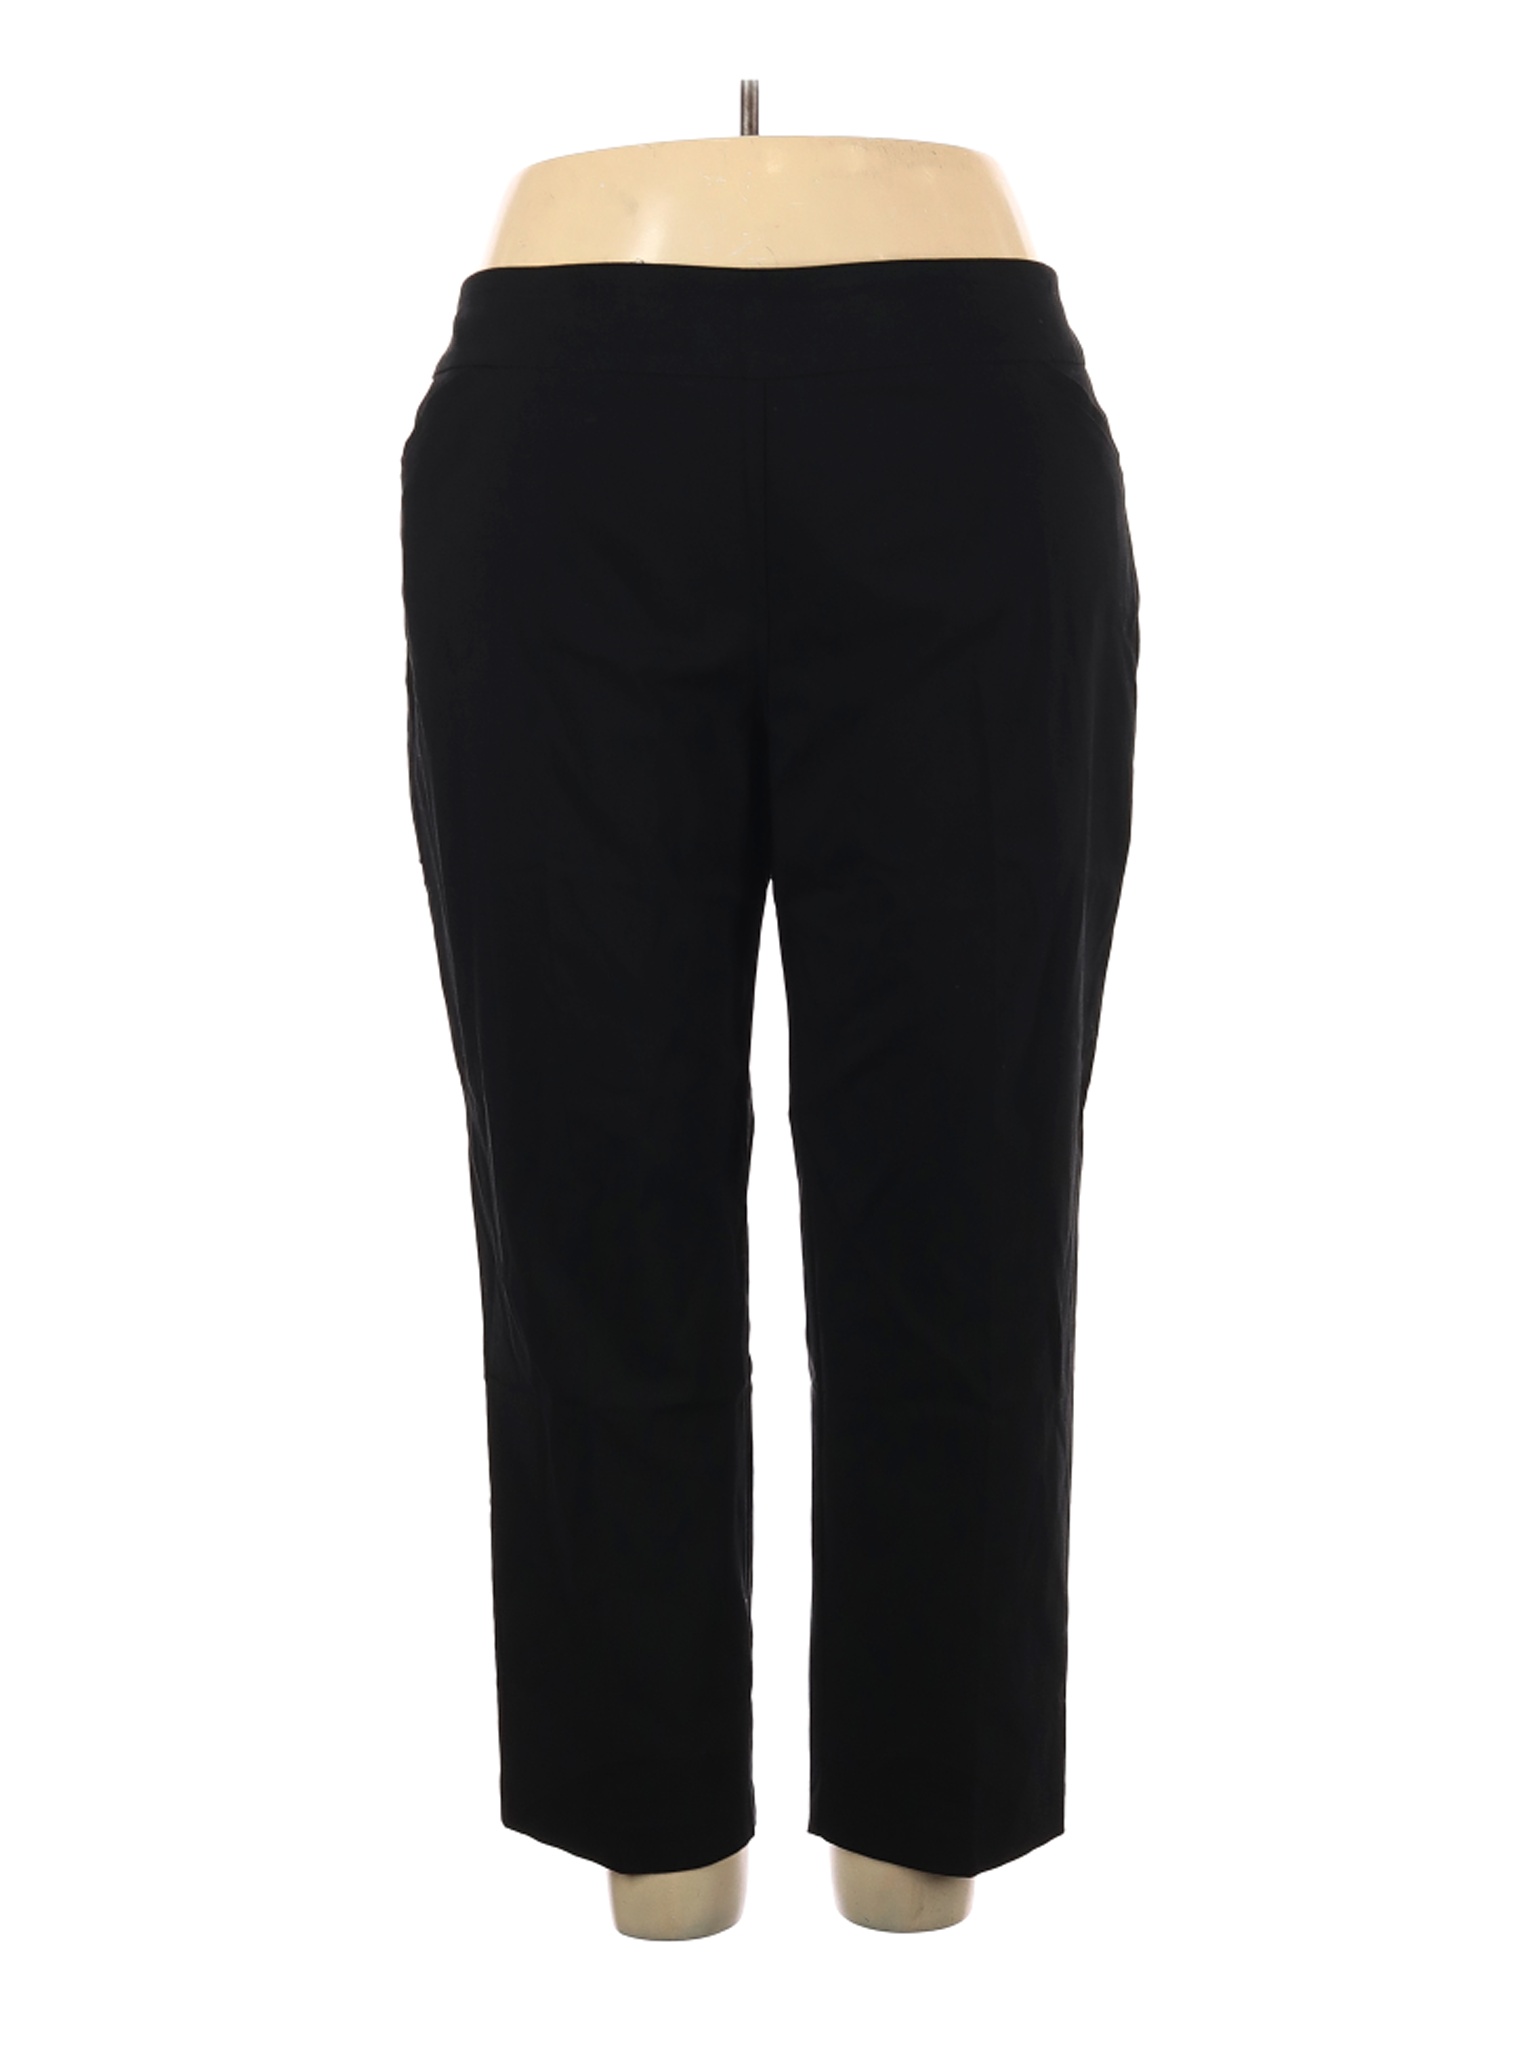 Terra & Sky Women Black Dress Pants 3X Plus | eBay